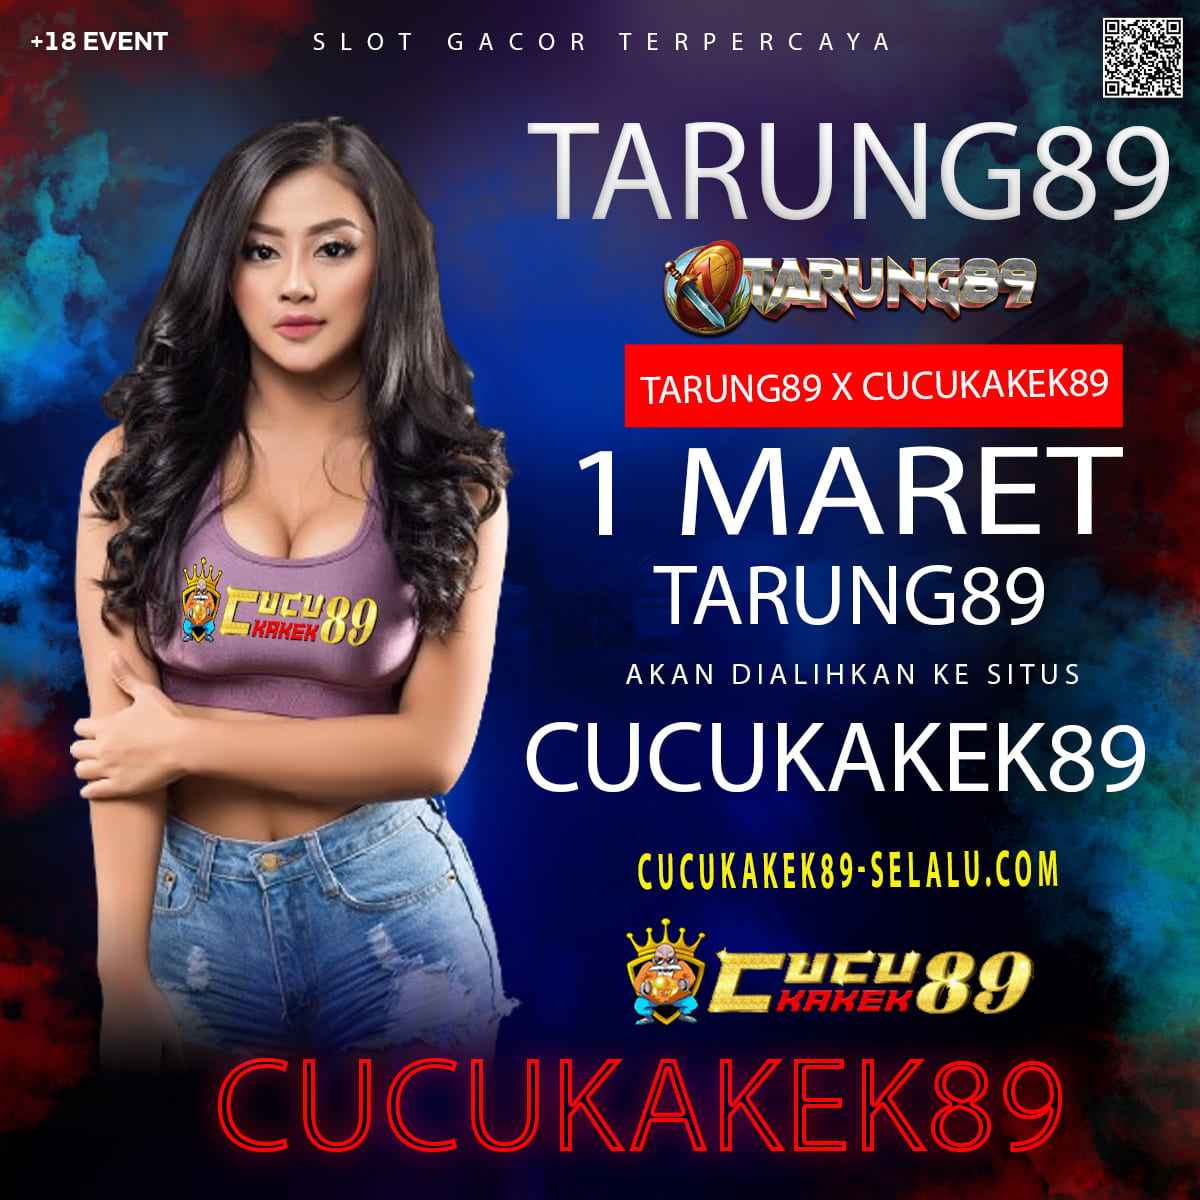 Tarung89: Agen Game Online Server Asia Slot Terbesar Indonesia No 1